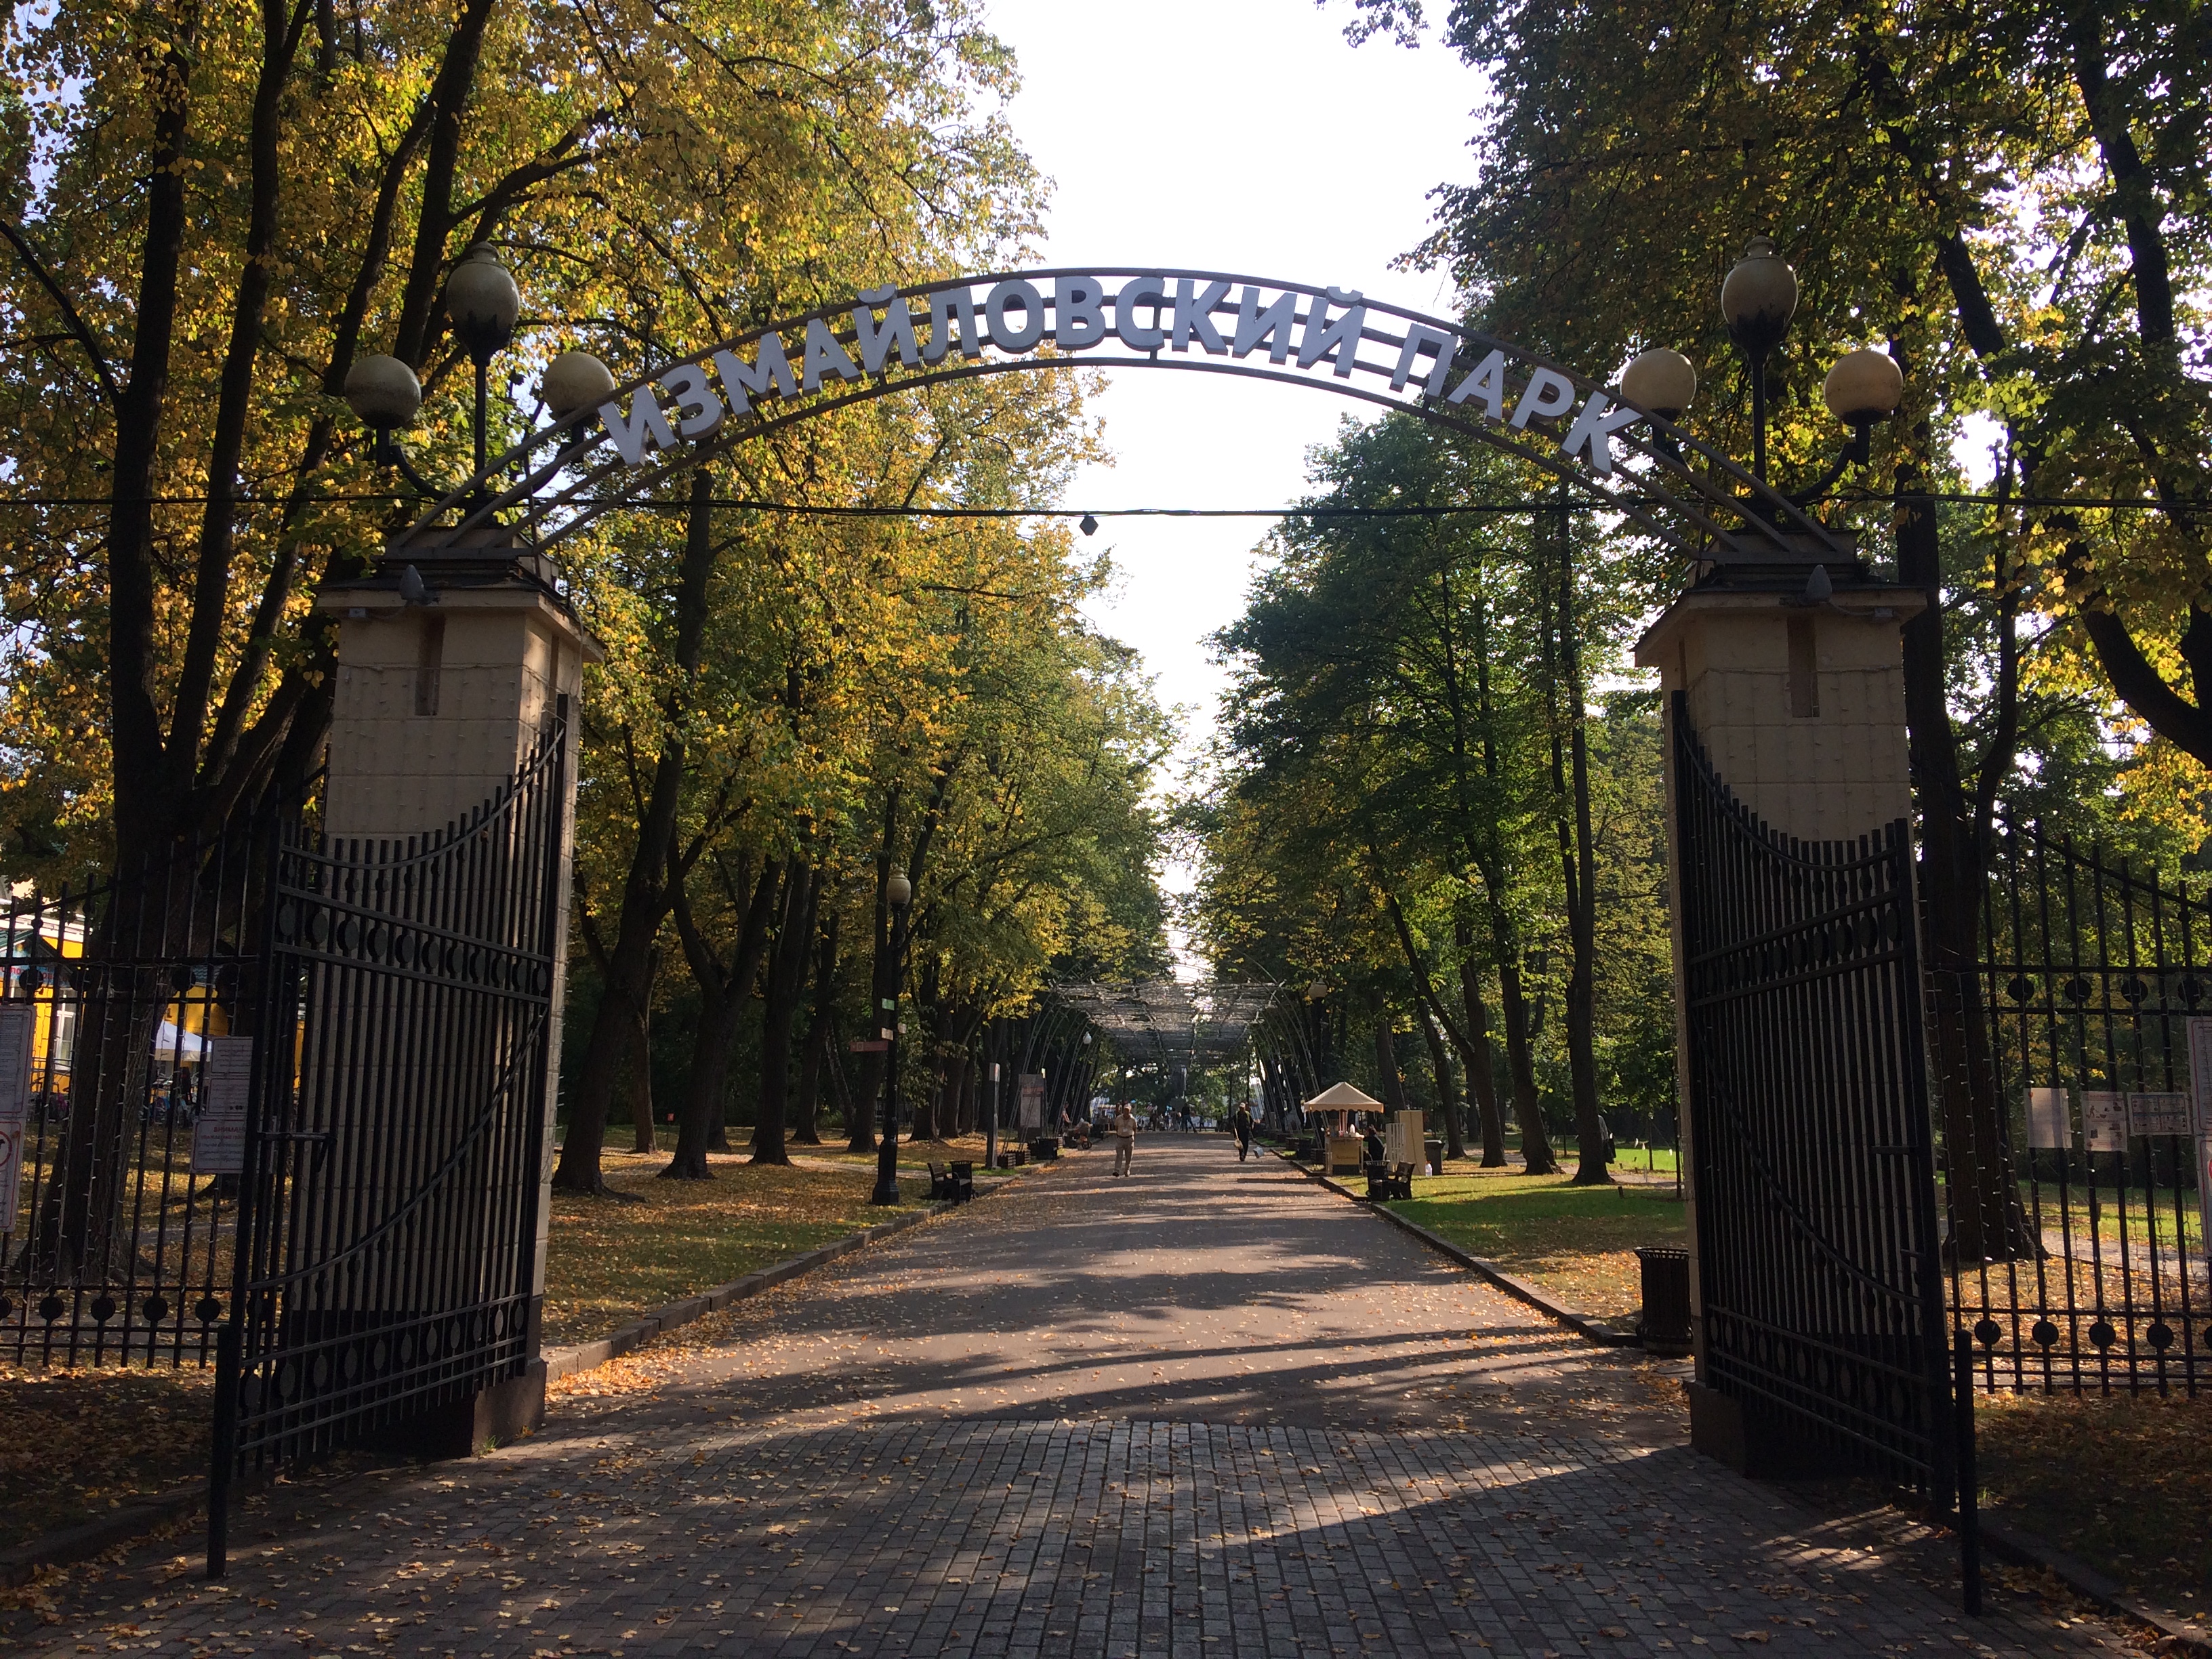 Enjoy a full day outdoors in the beautiful Izmaylovsky Park